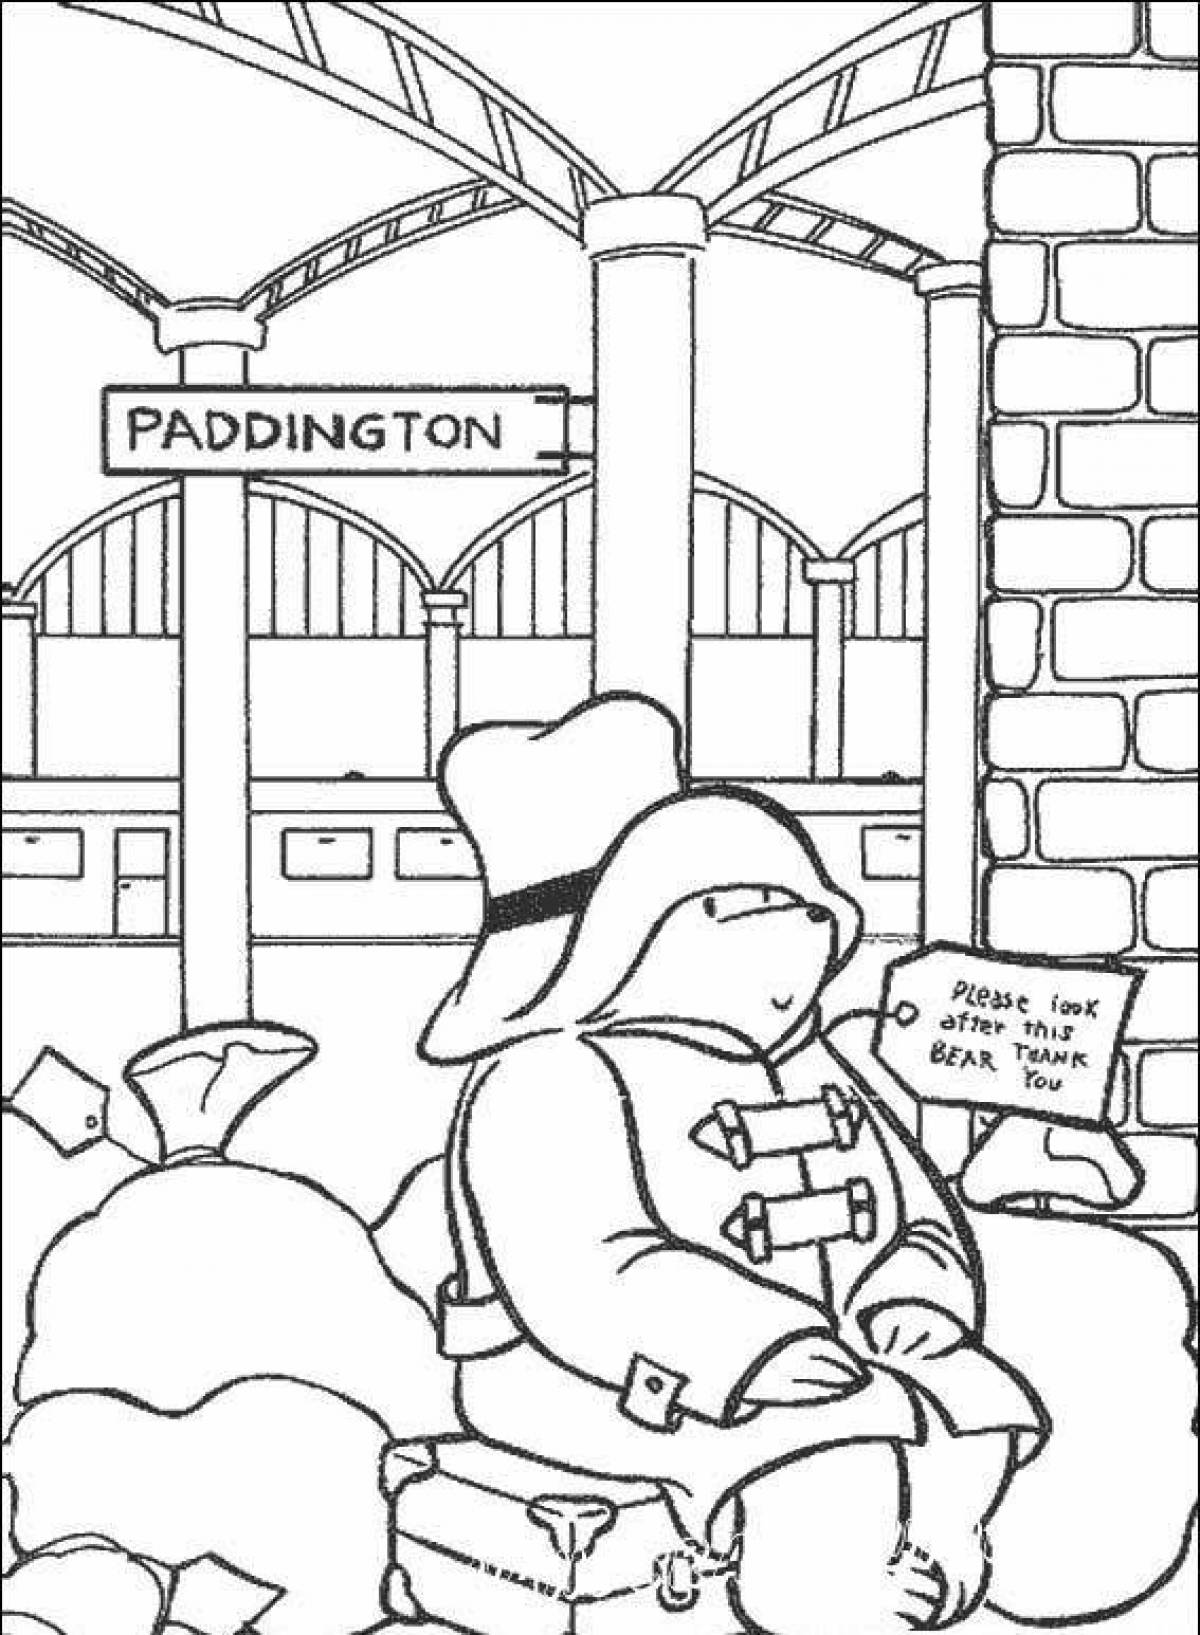 Charming paddington coloring page